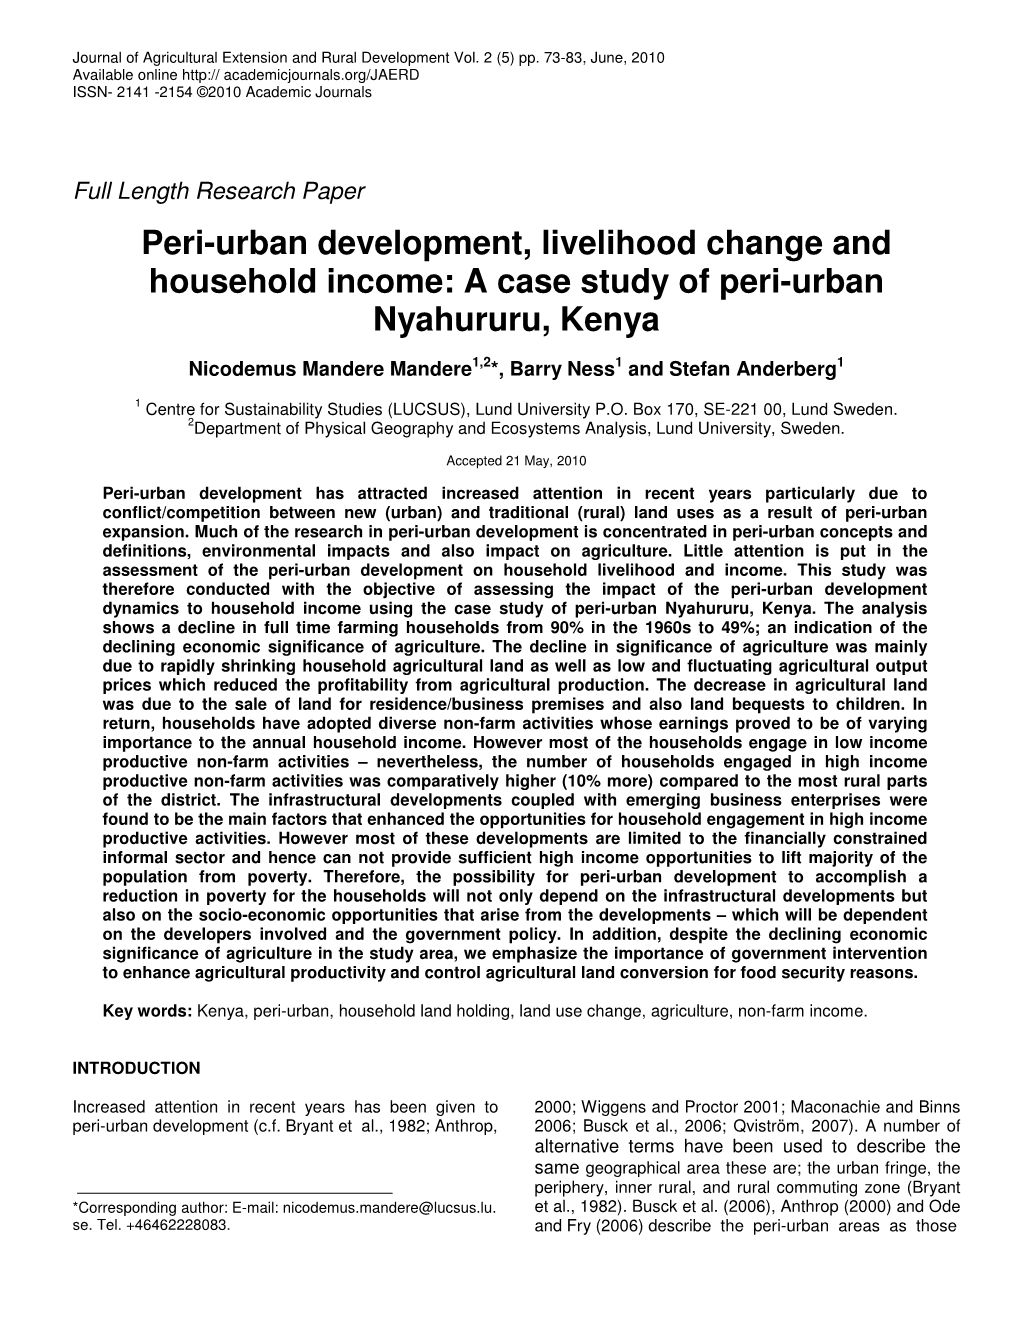 Peri-Urban Development, Livelihood Change and Household Income: a Case Study of Peri-Urban Nyahururu, Kenya